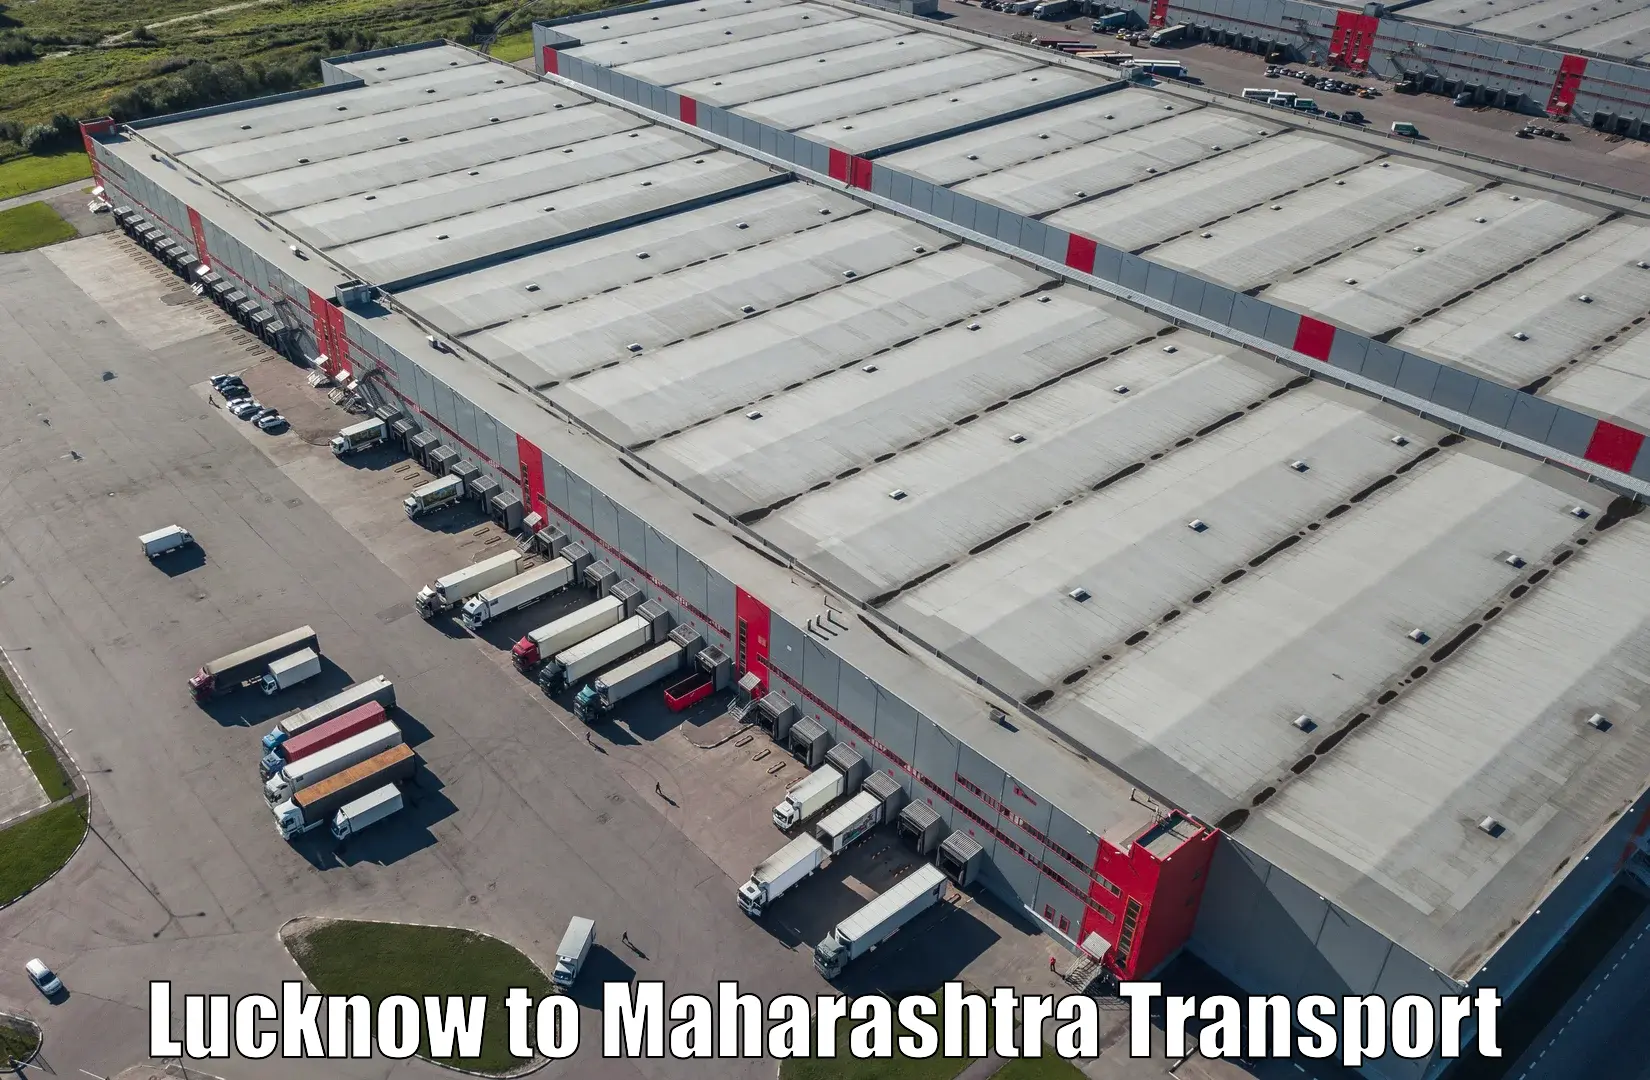 Truck transport companies in India Lucknow to Ratnagiri